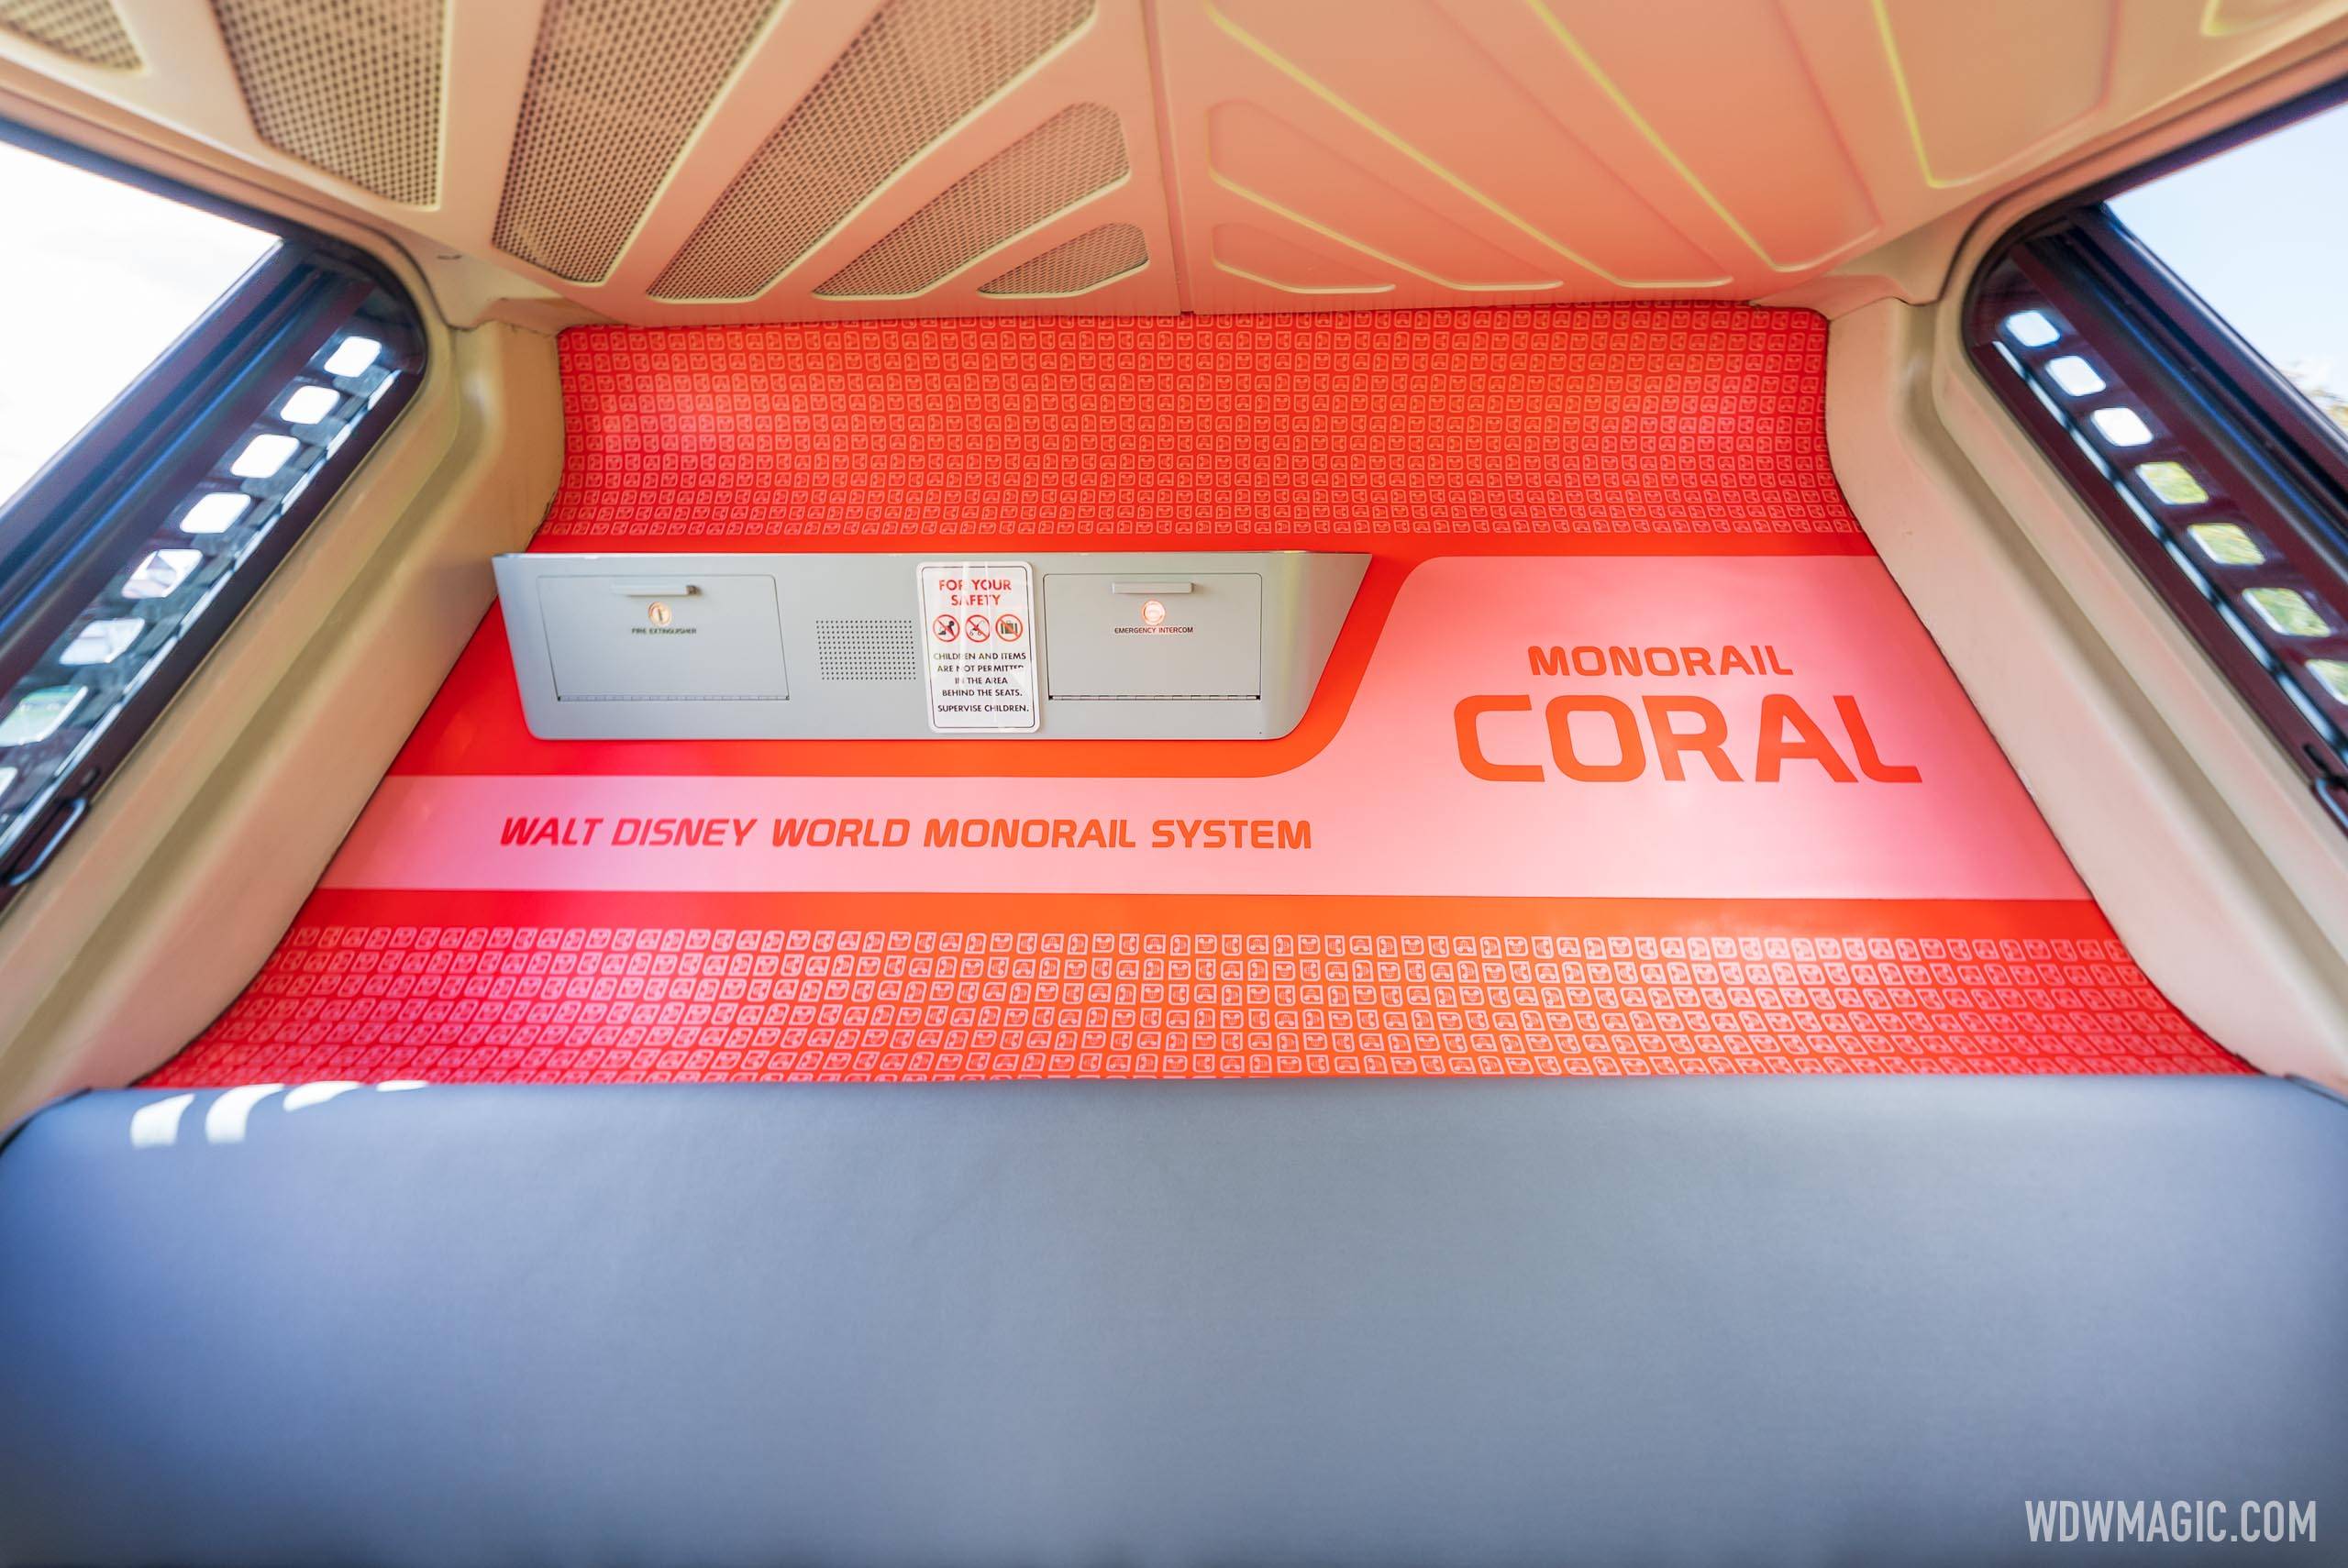 Monorail Coral refurbished - October 2021